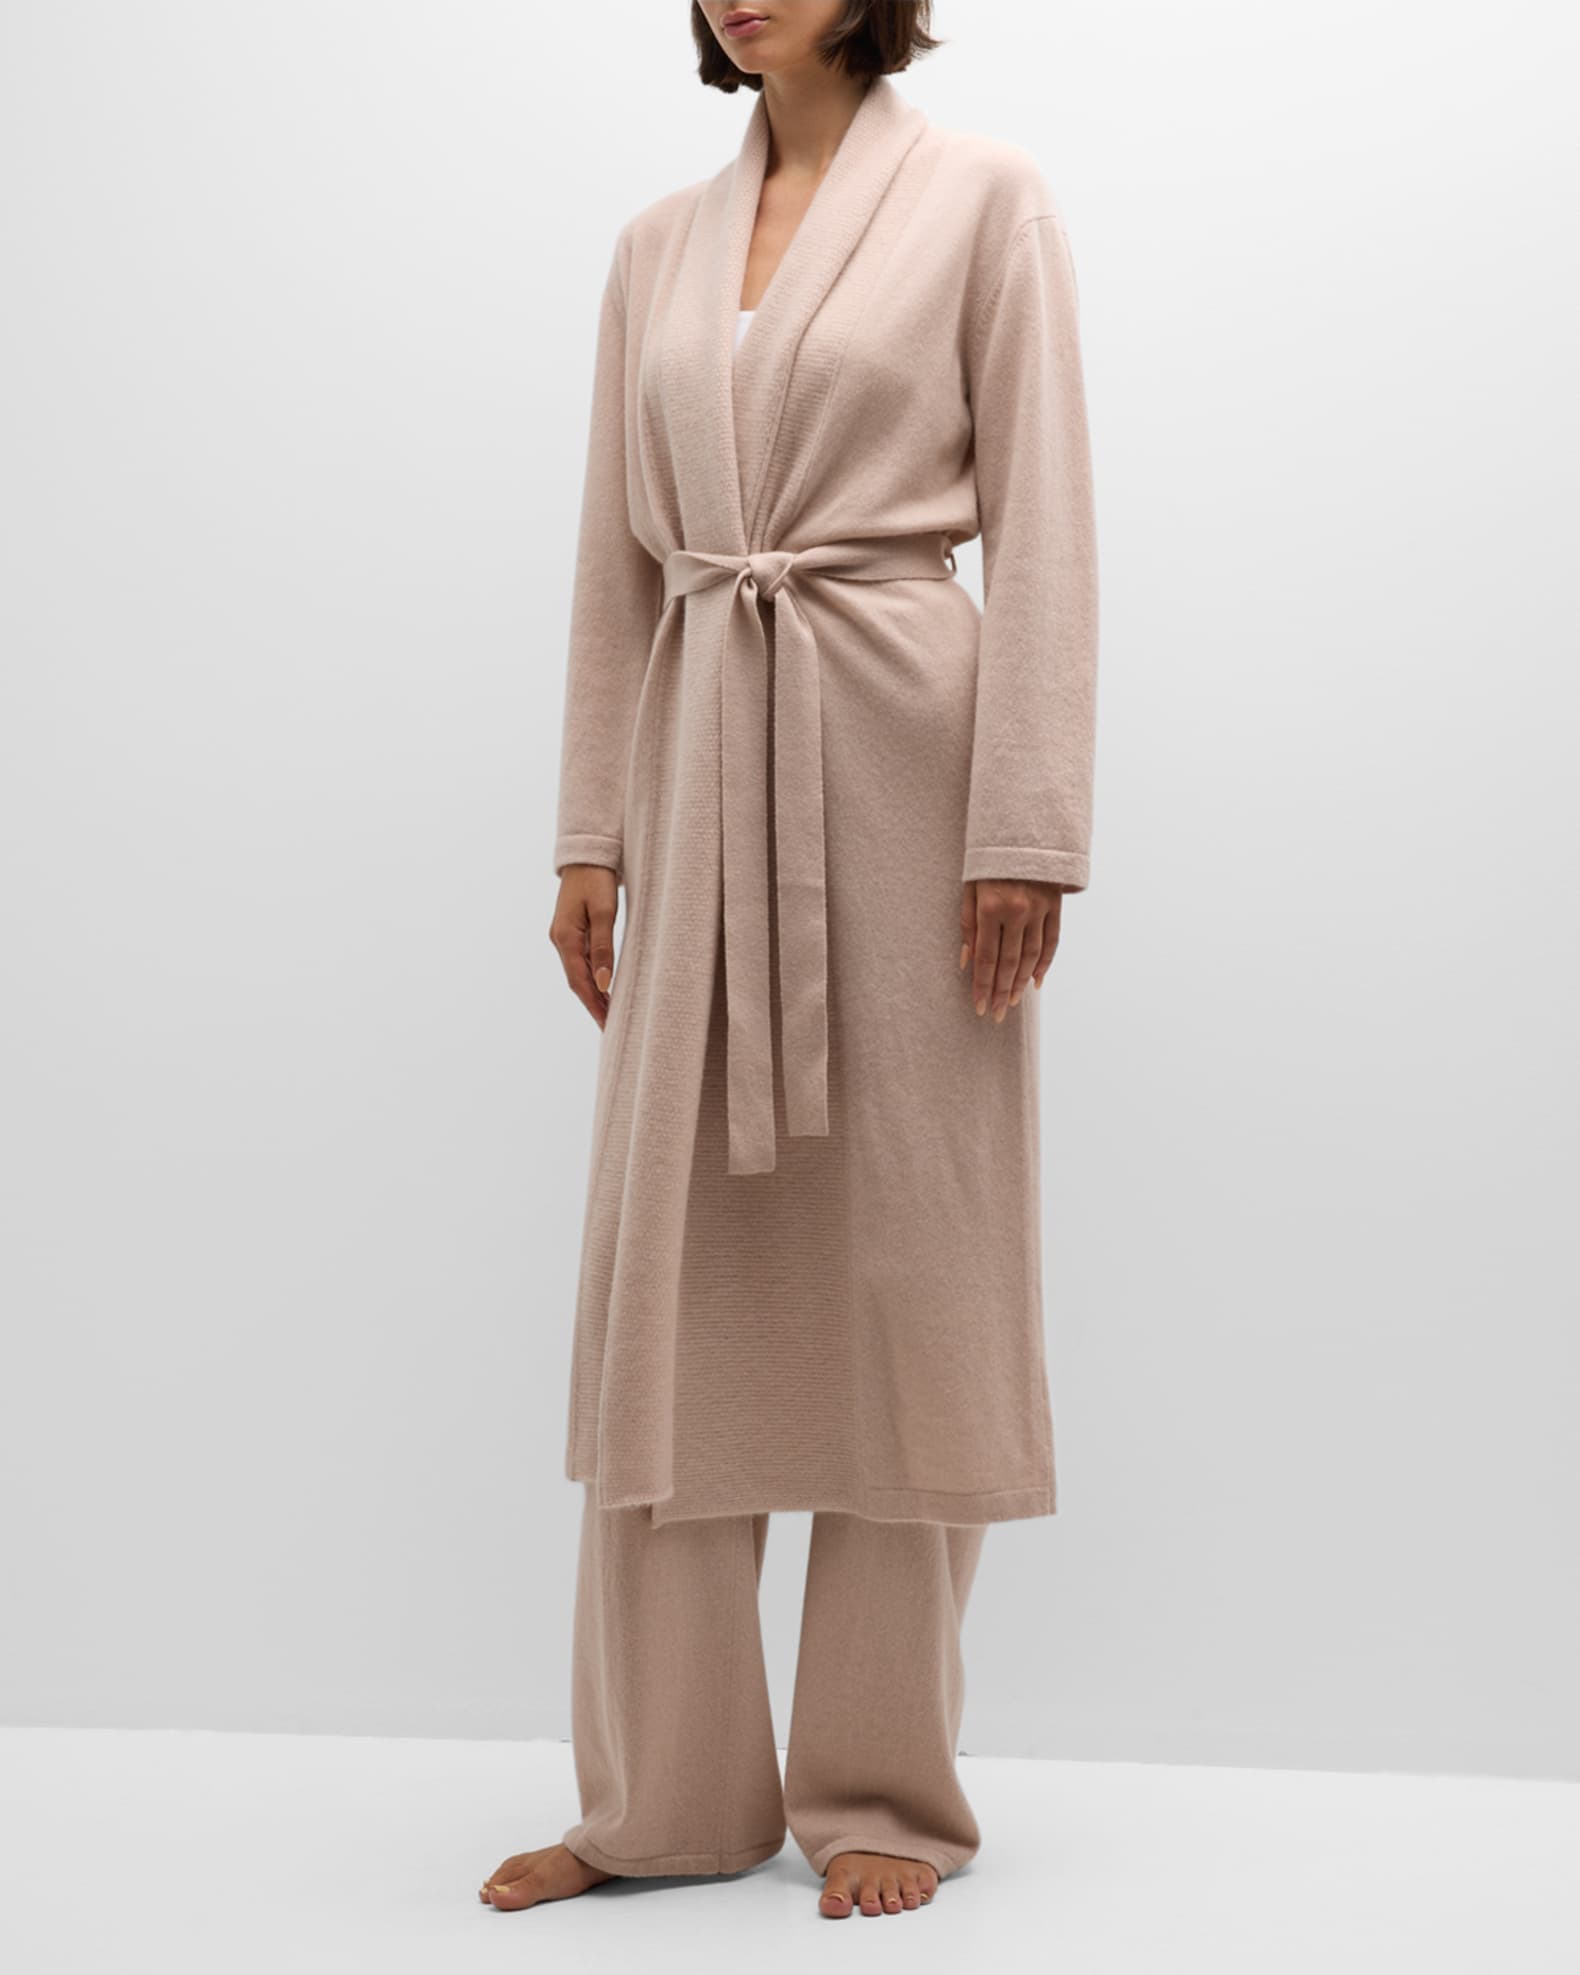 Neiman Marcus Cashmere Collection Cashmere Shawl-Collar Robe